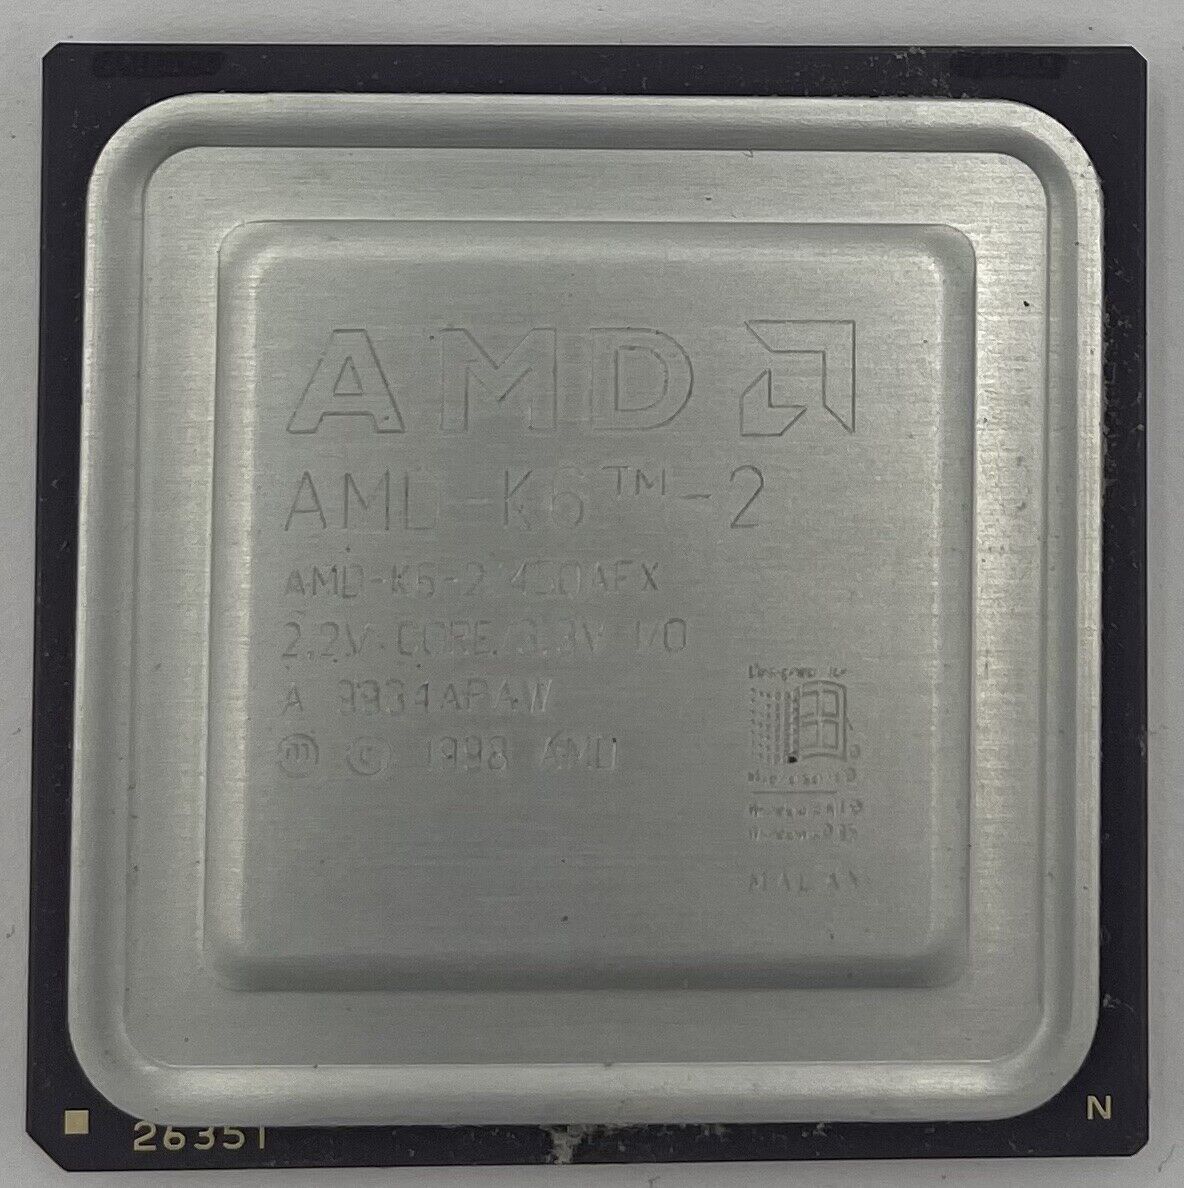 AMD K6-2 450 MHz Desktop CPU Processor- AMD-K6-2/450AFX